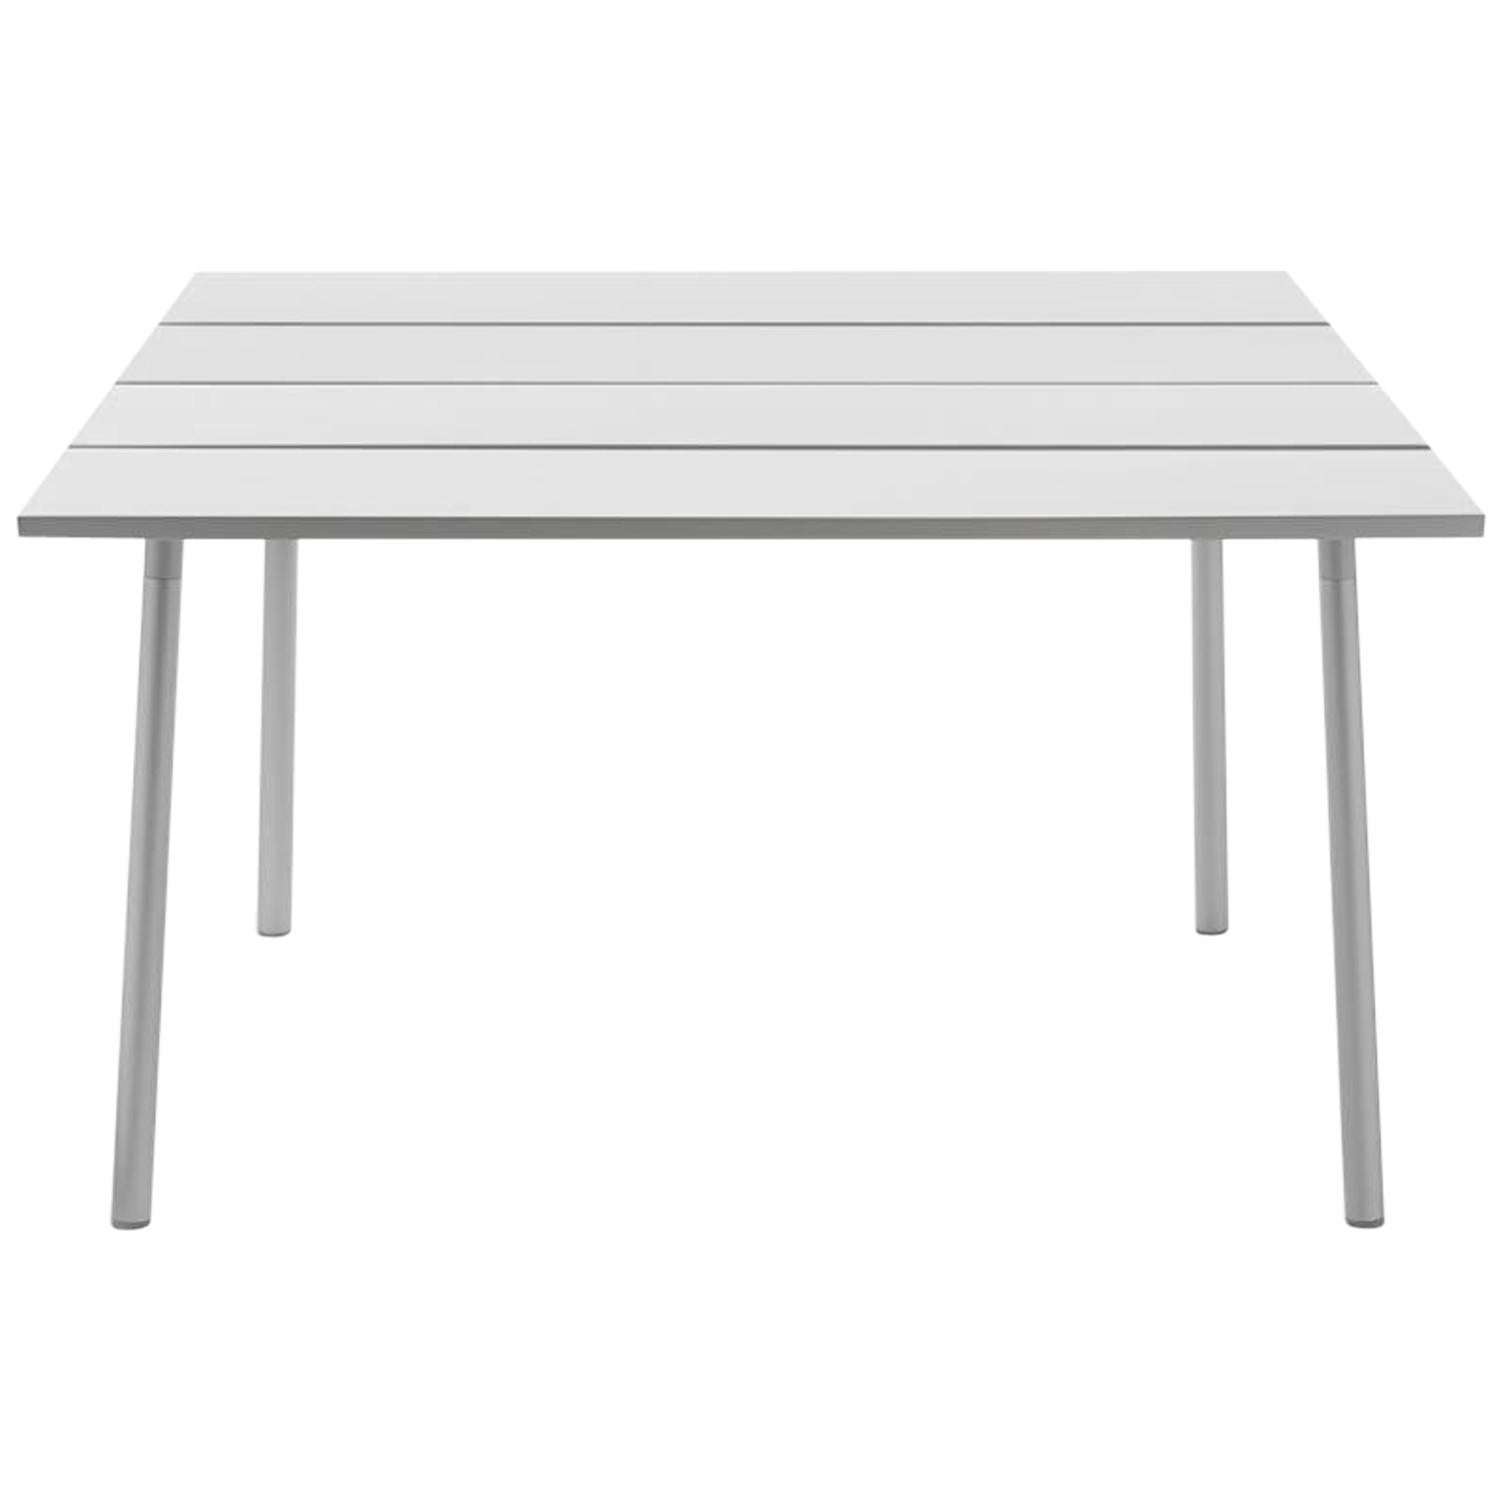 Table moyenne Emeco Run en aluminium anodisé transparent par Sam Hecht & Kim Colin